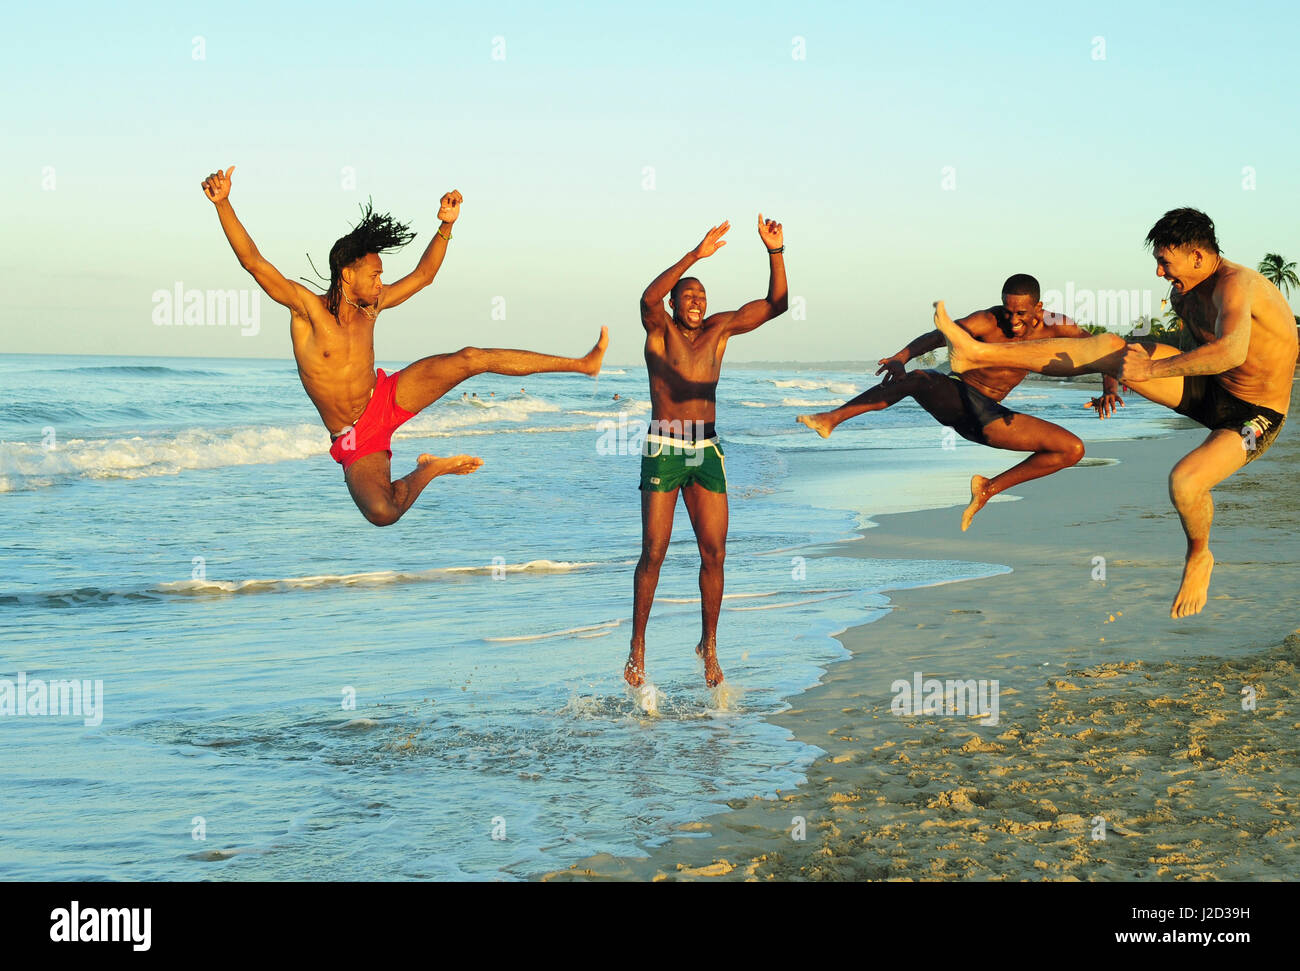 Cuba, La Havana, 4 friends having fun on the beach Stock Photo